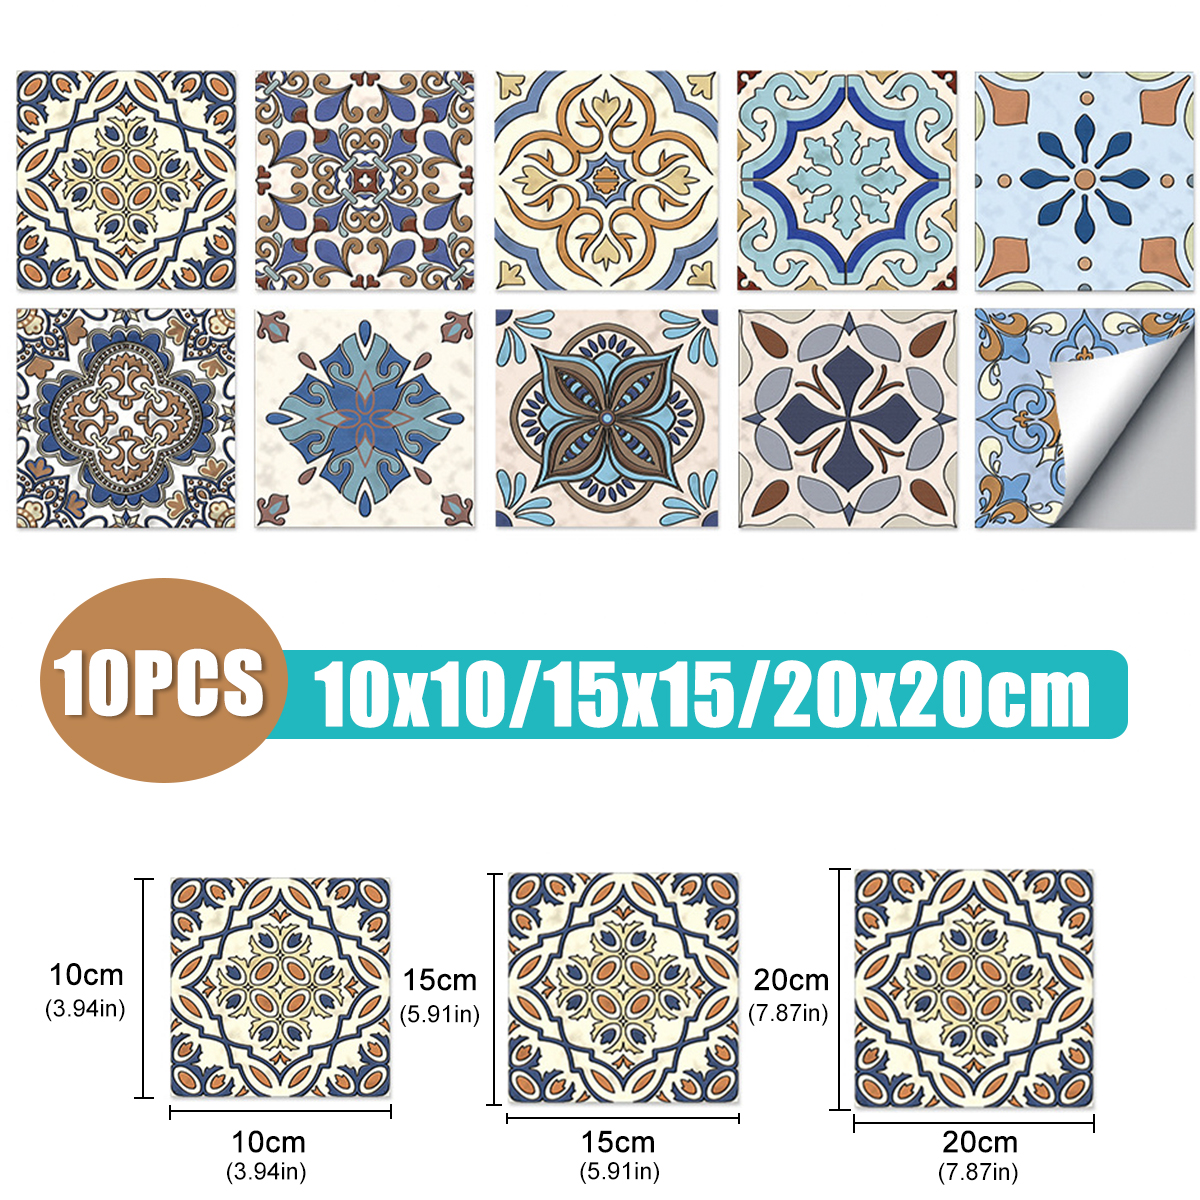 10-PCS-10x1015x1520x20cm-Wall-Tiles-Stickers-Kitchen-Bathroom-Toilet--Waterproof--PVC-1717154-1